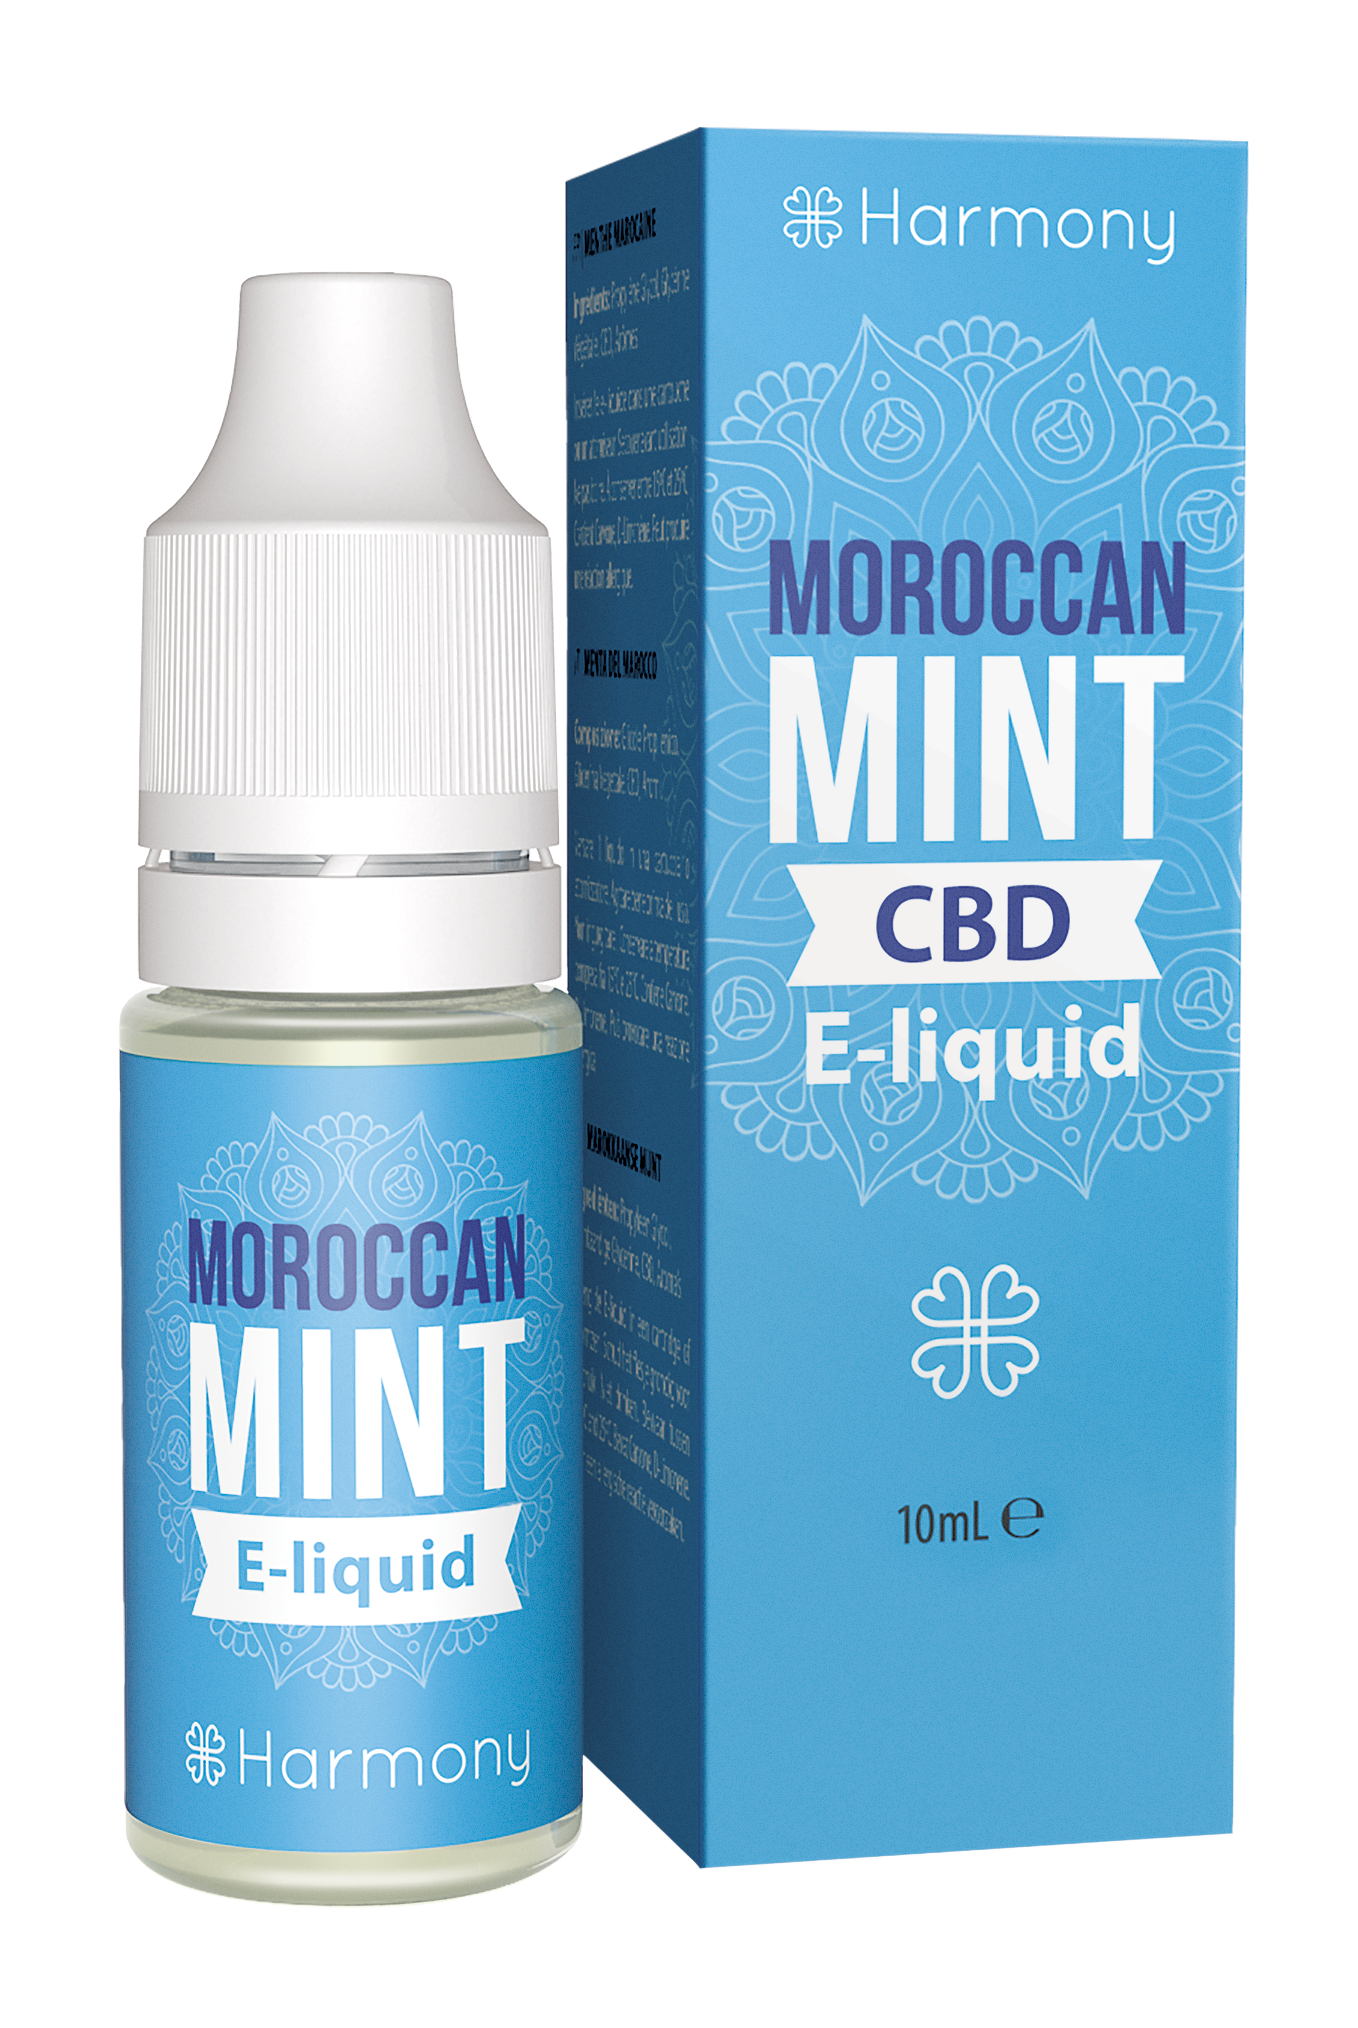 Moroccan Mint E-liquid 10ml - 30mg